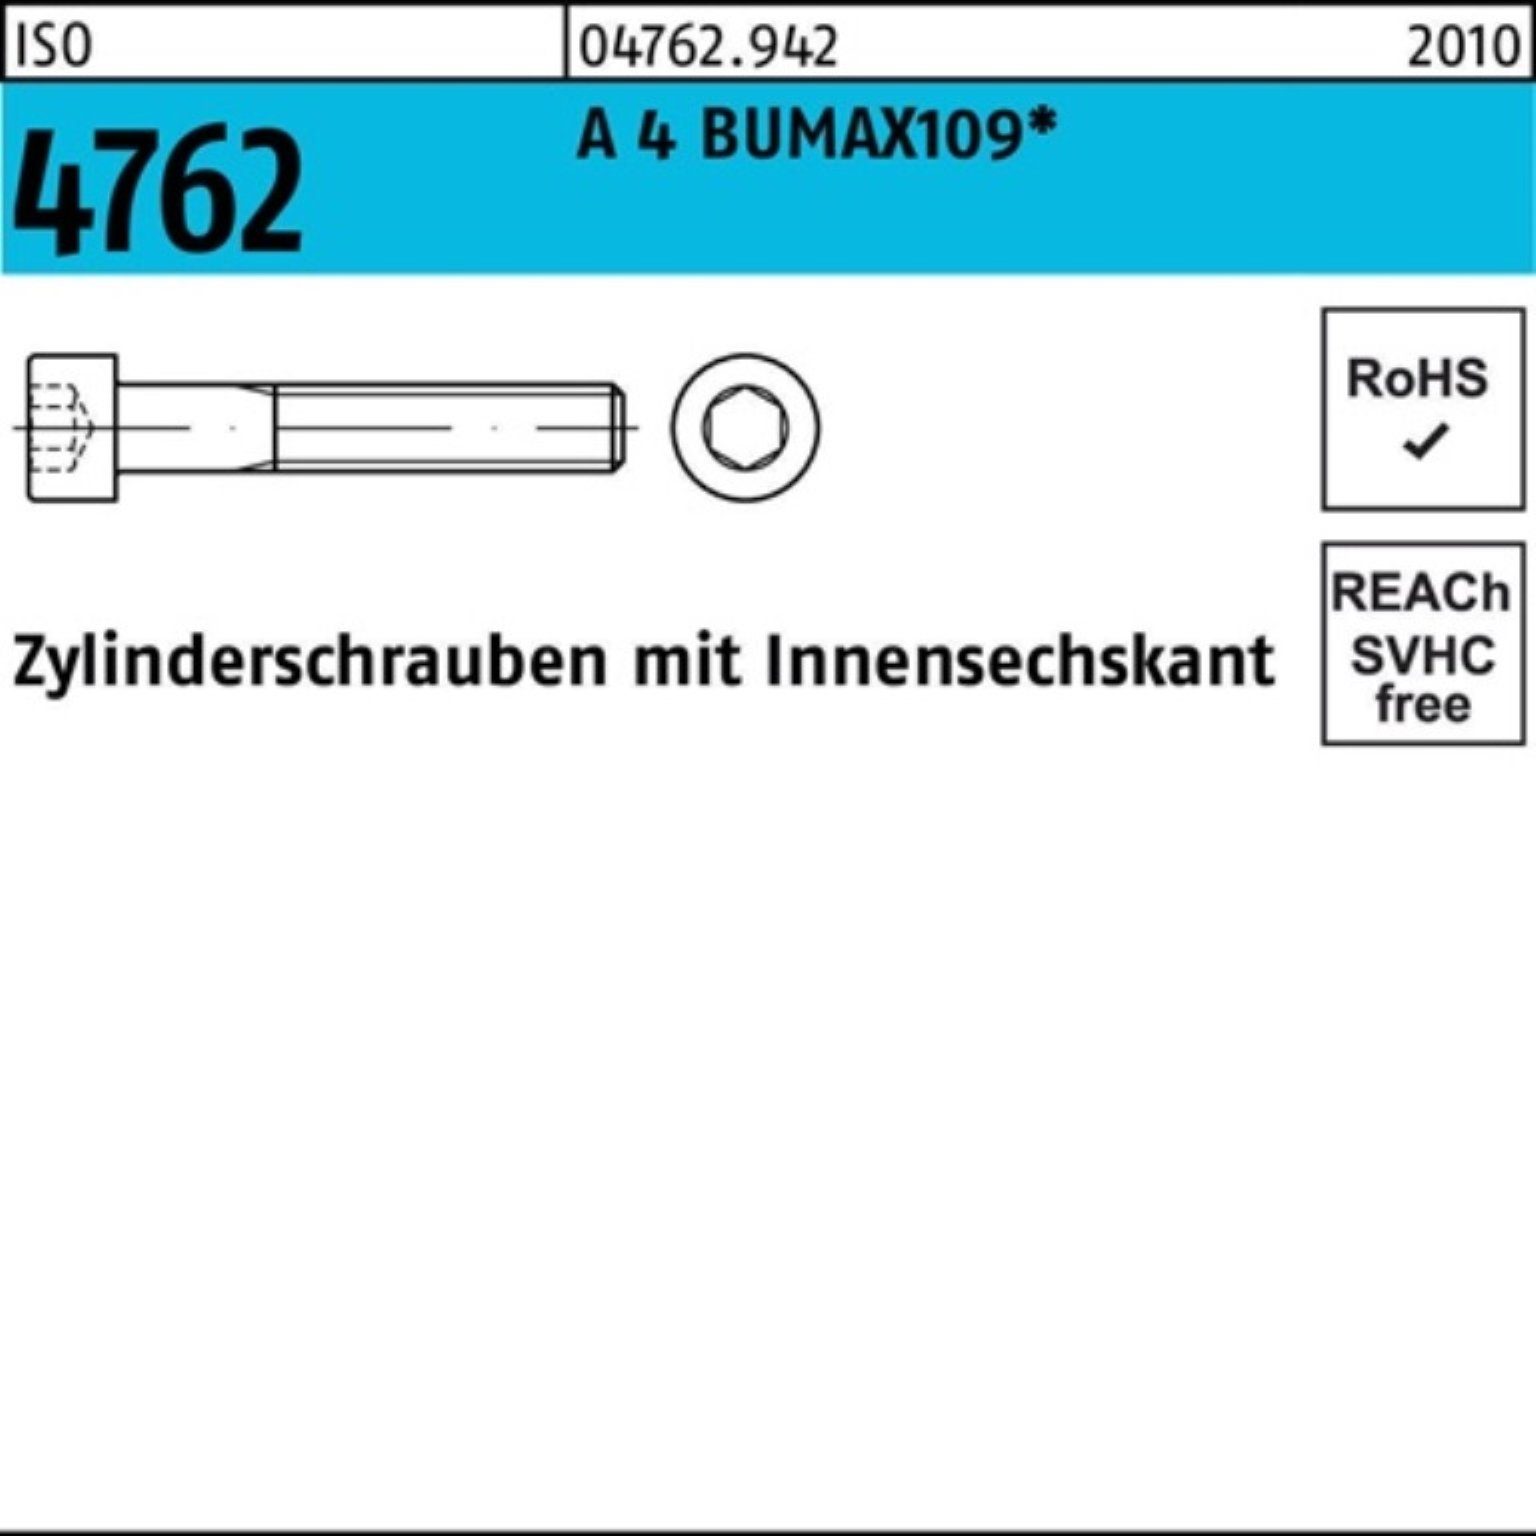 Bufab Zylinderschraube 100er Pack Zylinderschraube ISO 4762 Innen-6kt M10x 50 A 4 BUMAX109 50